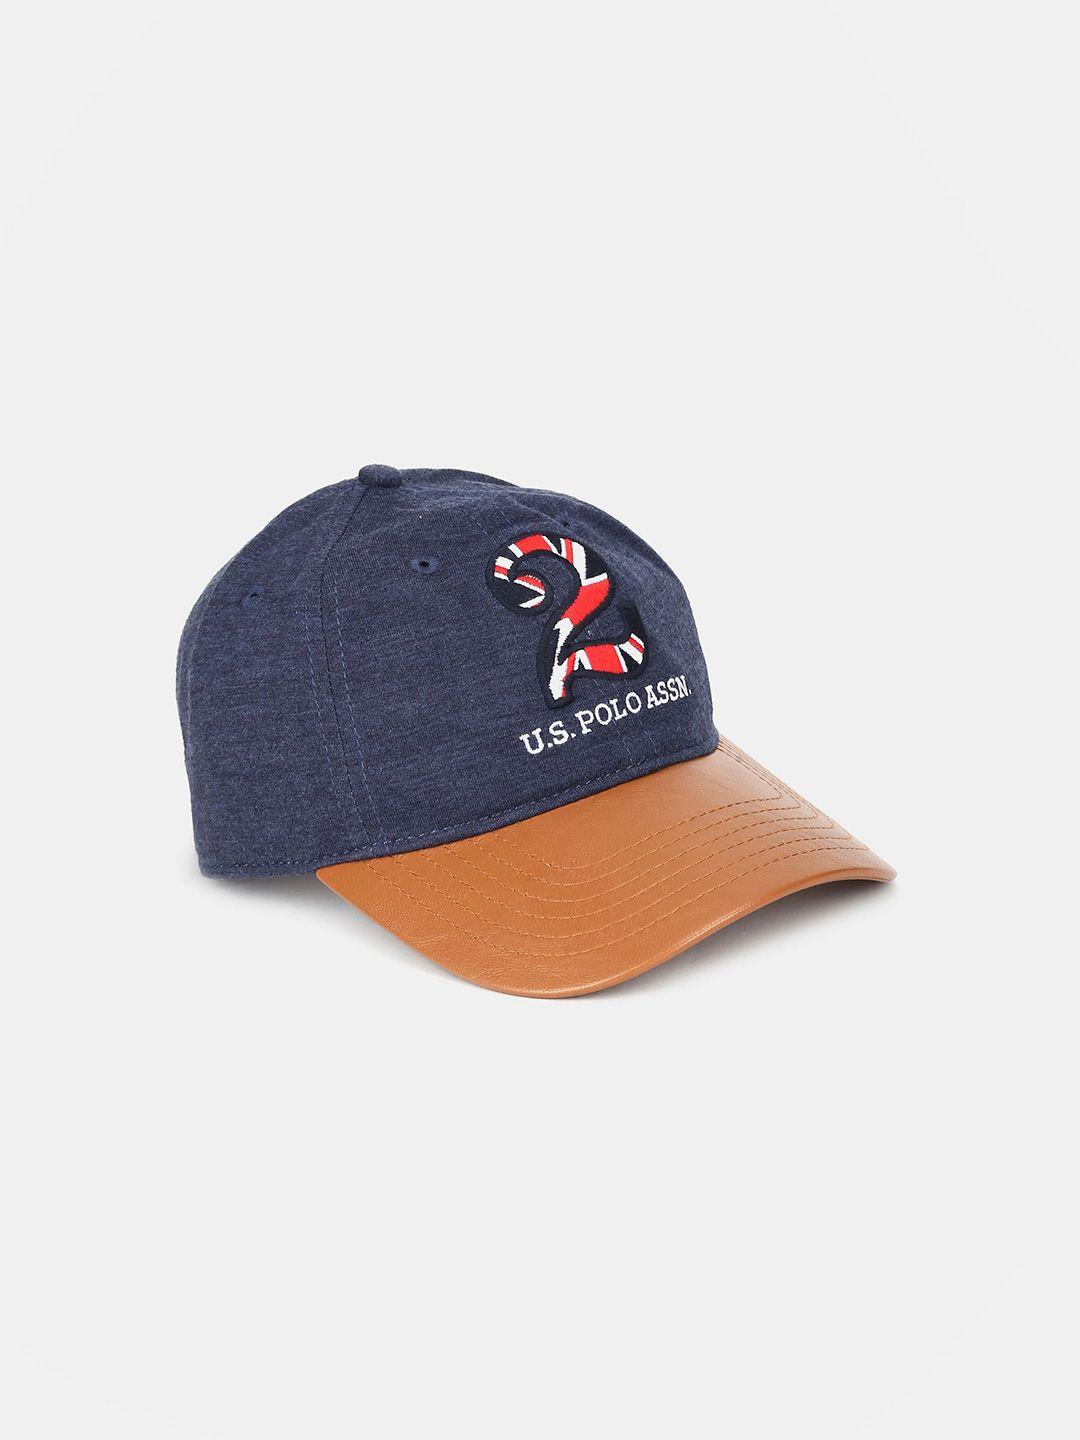 u s polo assn men blue & orange printed baseball cap